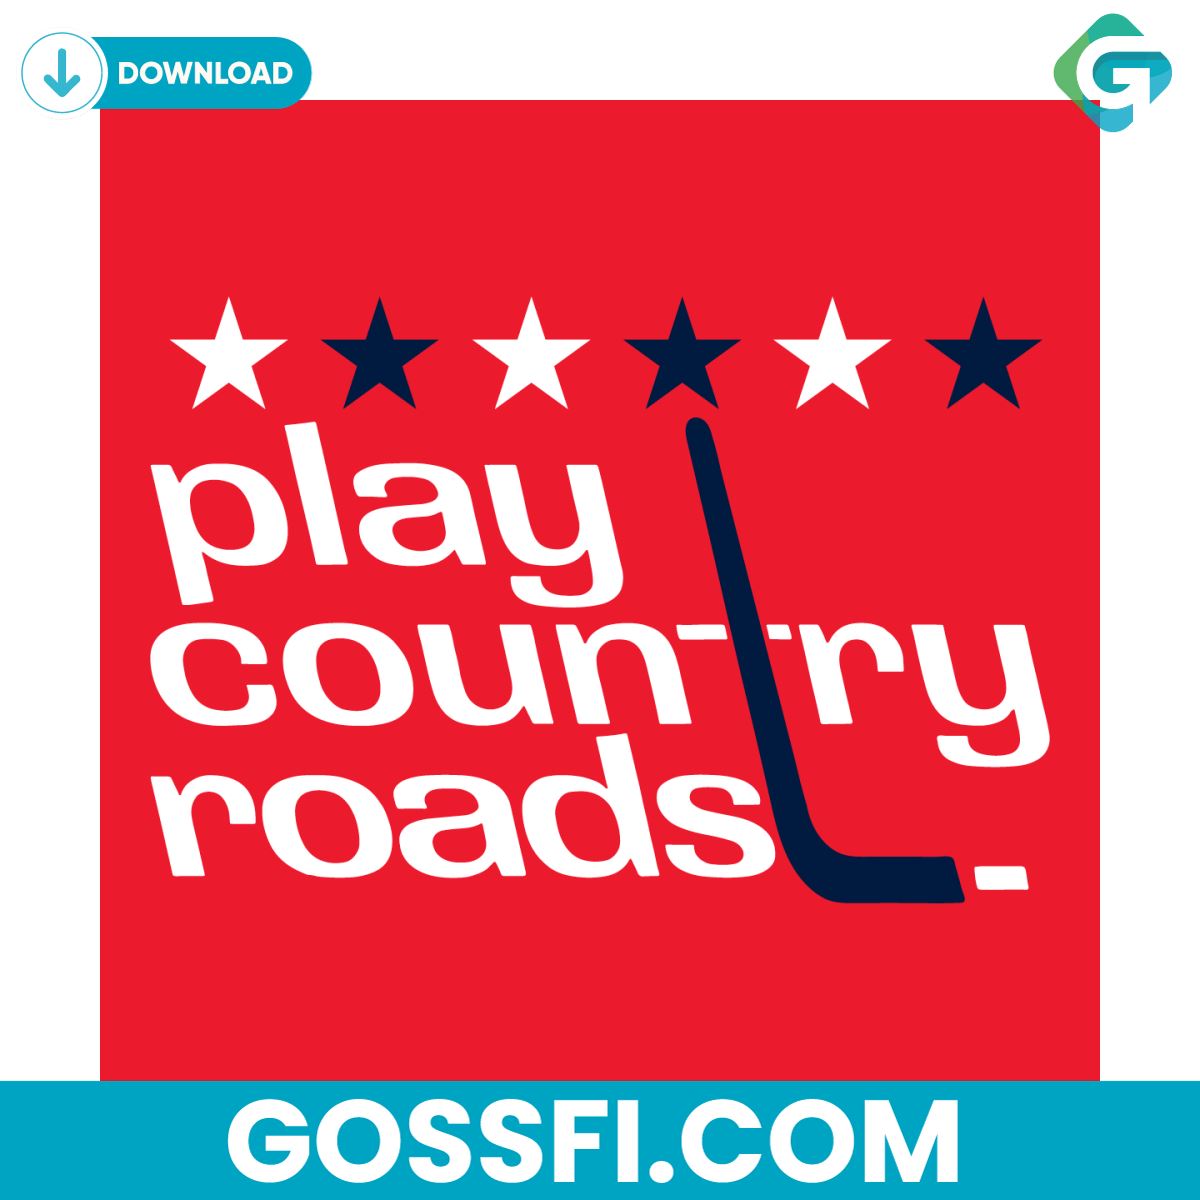 washington-hockey-play-country-roads-svg-digital-download